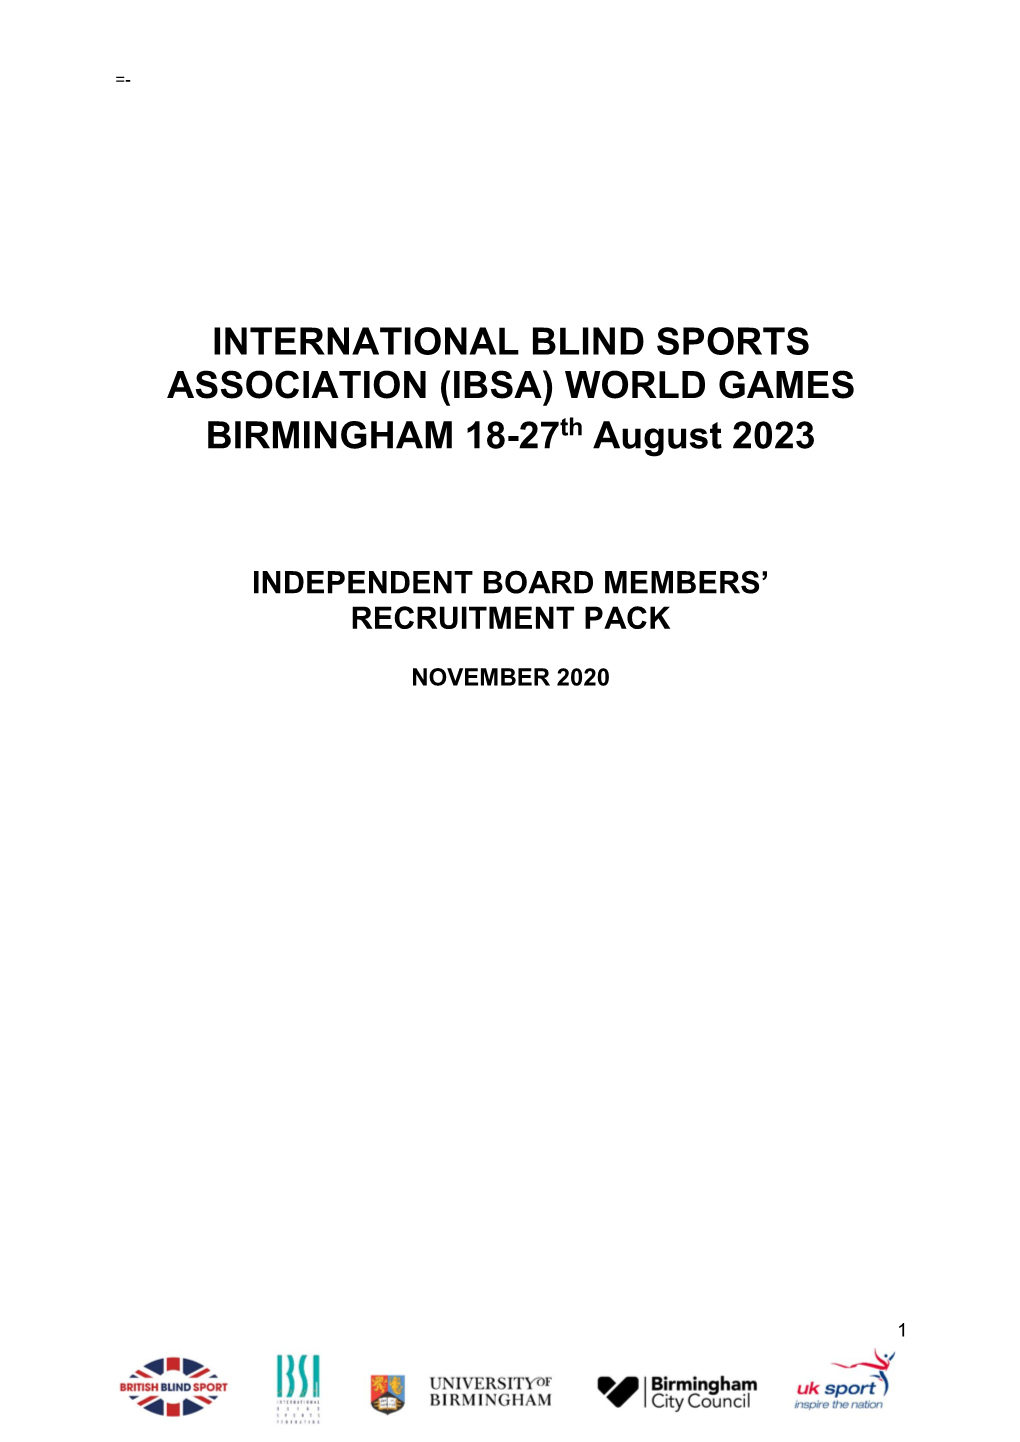 INTERNATIONAL BLIND SPORTS ASSOCIATION (IBSA) WORLD GAMES BIRMINGHAM 18-27Th August 2023